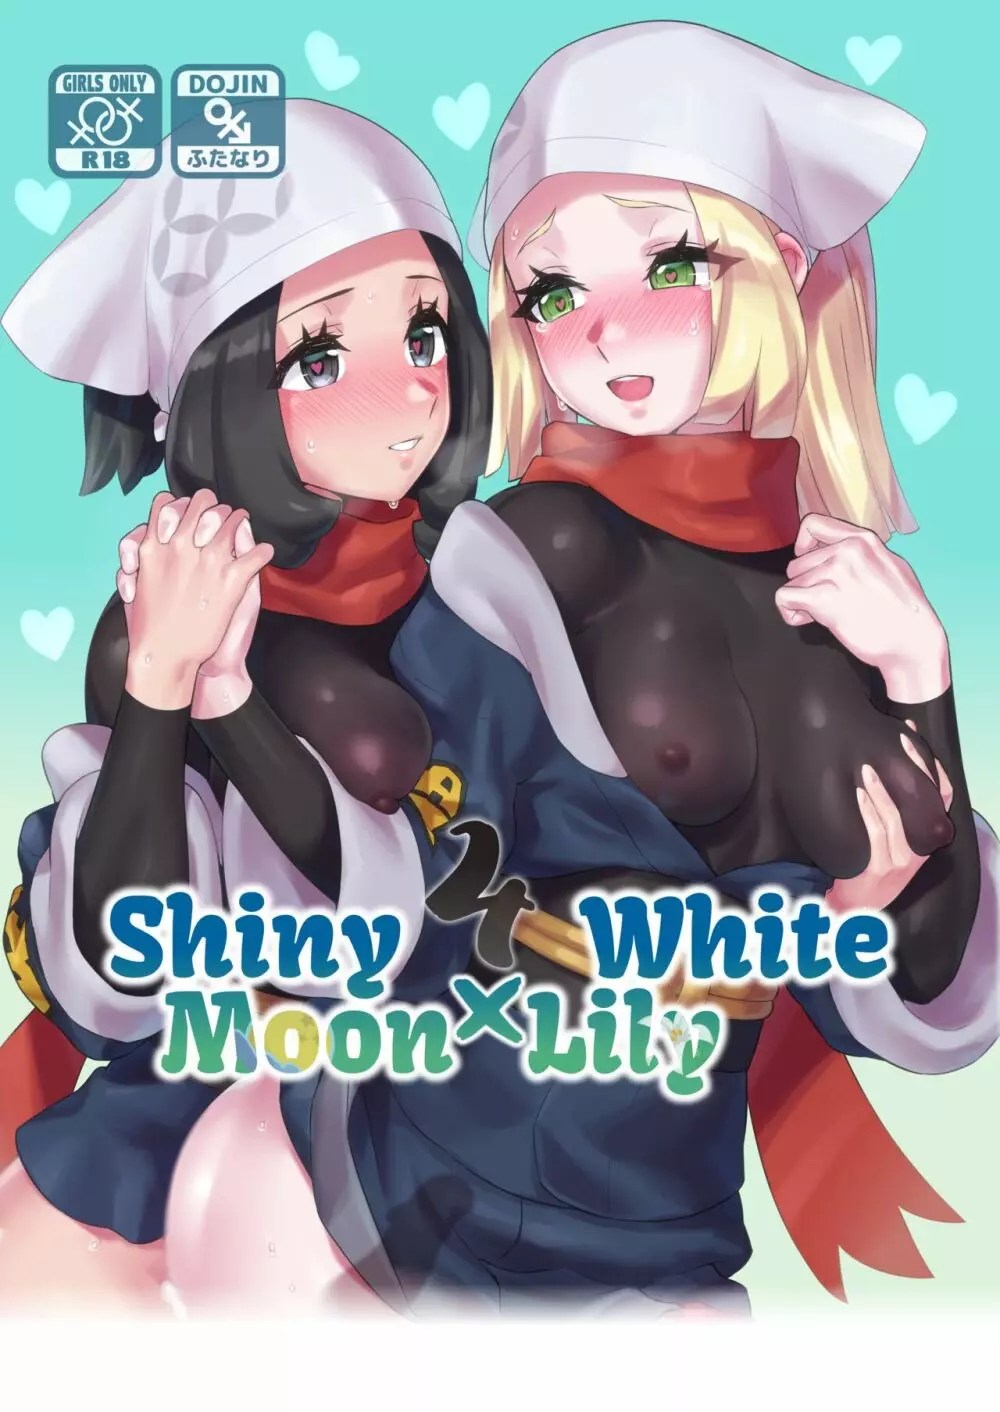 ShinyMoon x WhiteLily 4 - page1